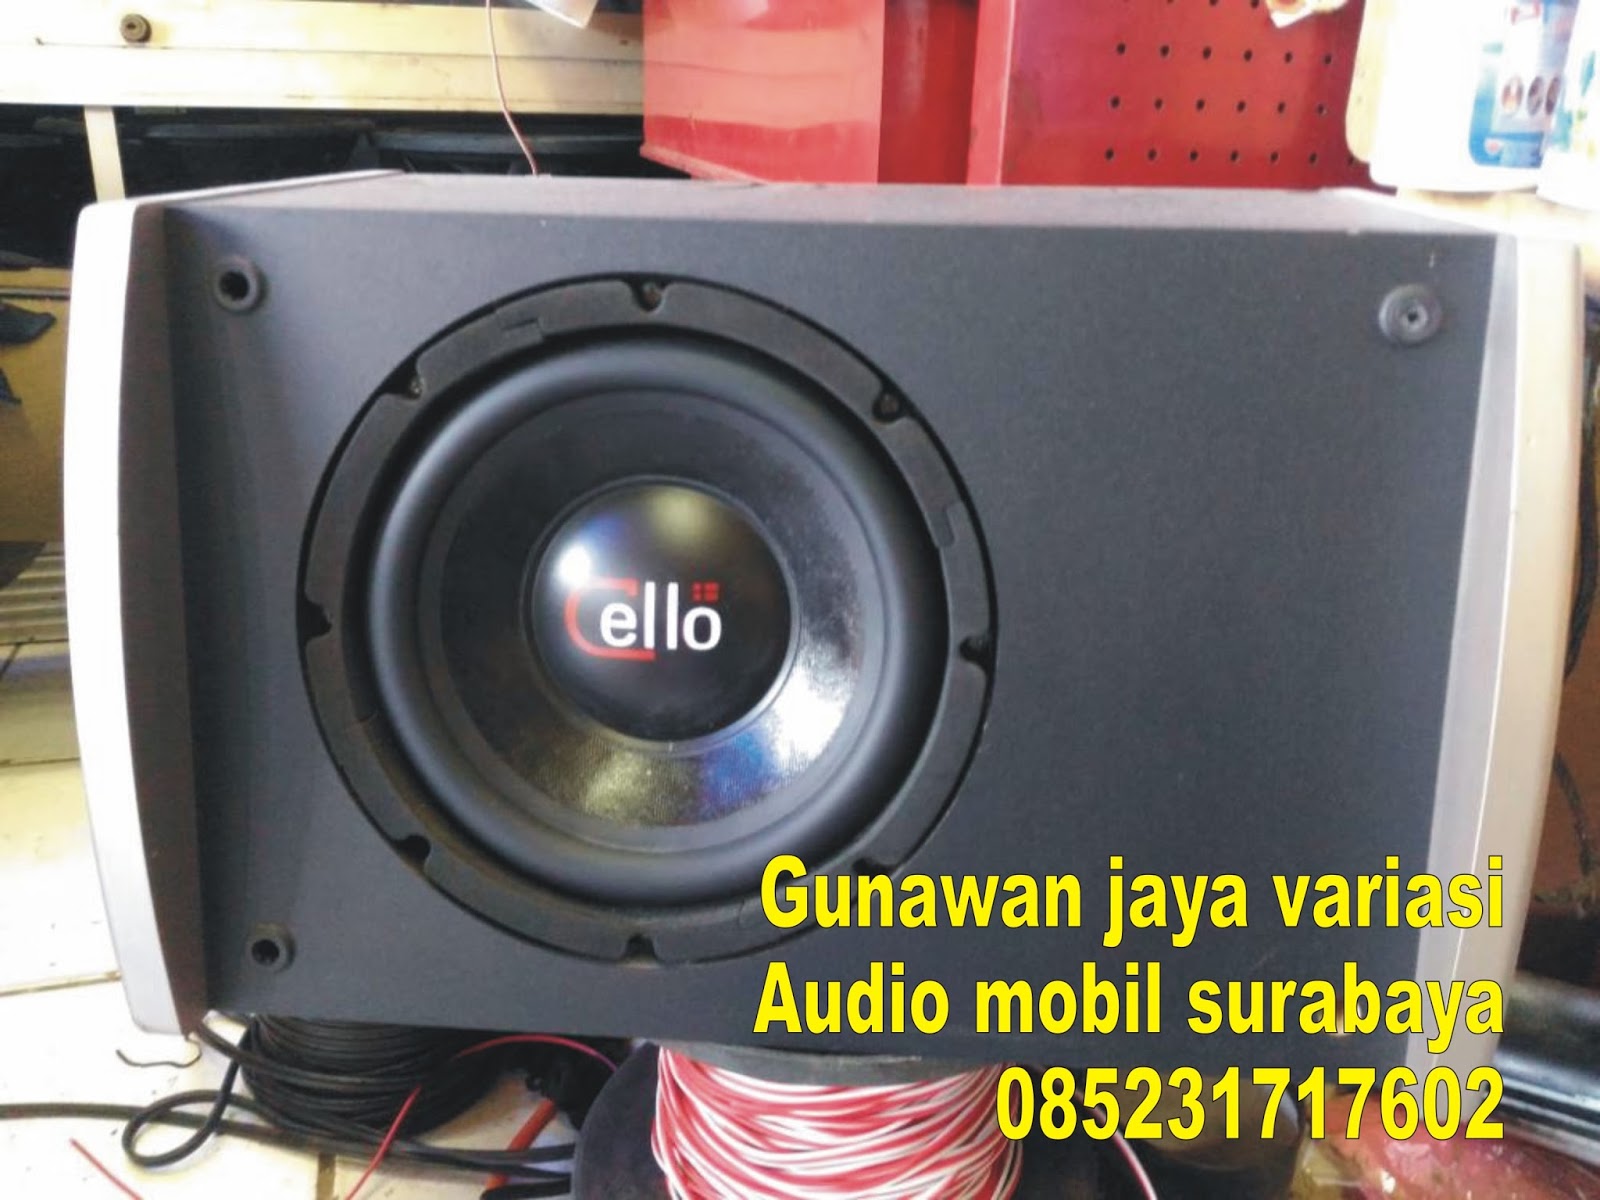 Audio Mobil Surabaya Cello Audio Surabaya 085231717602